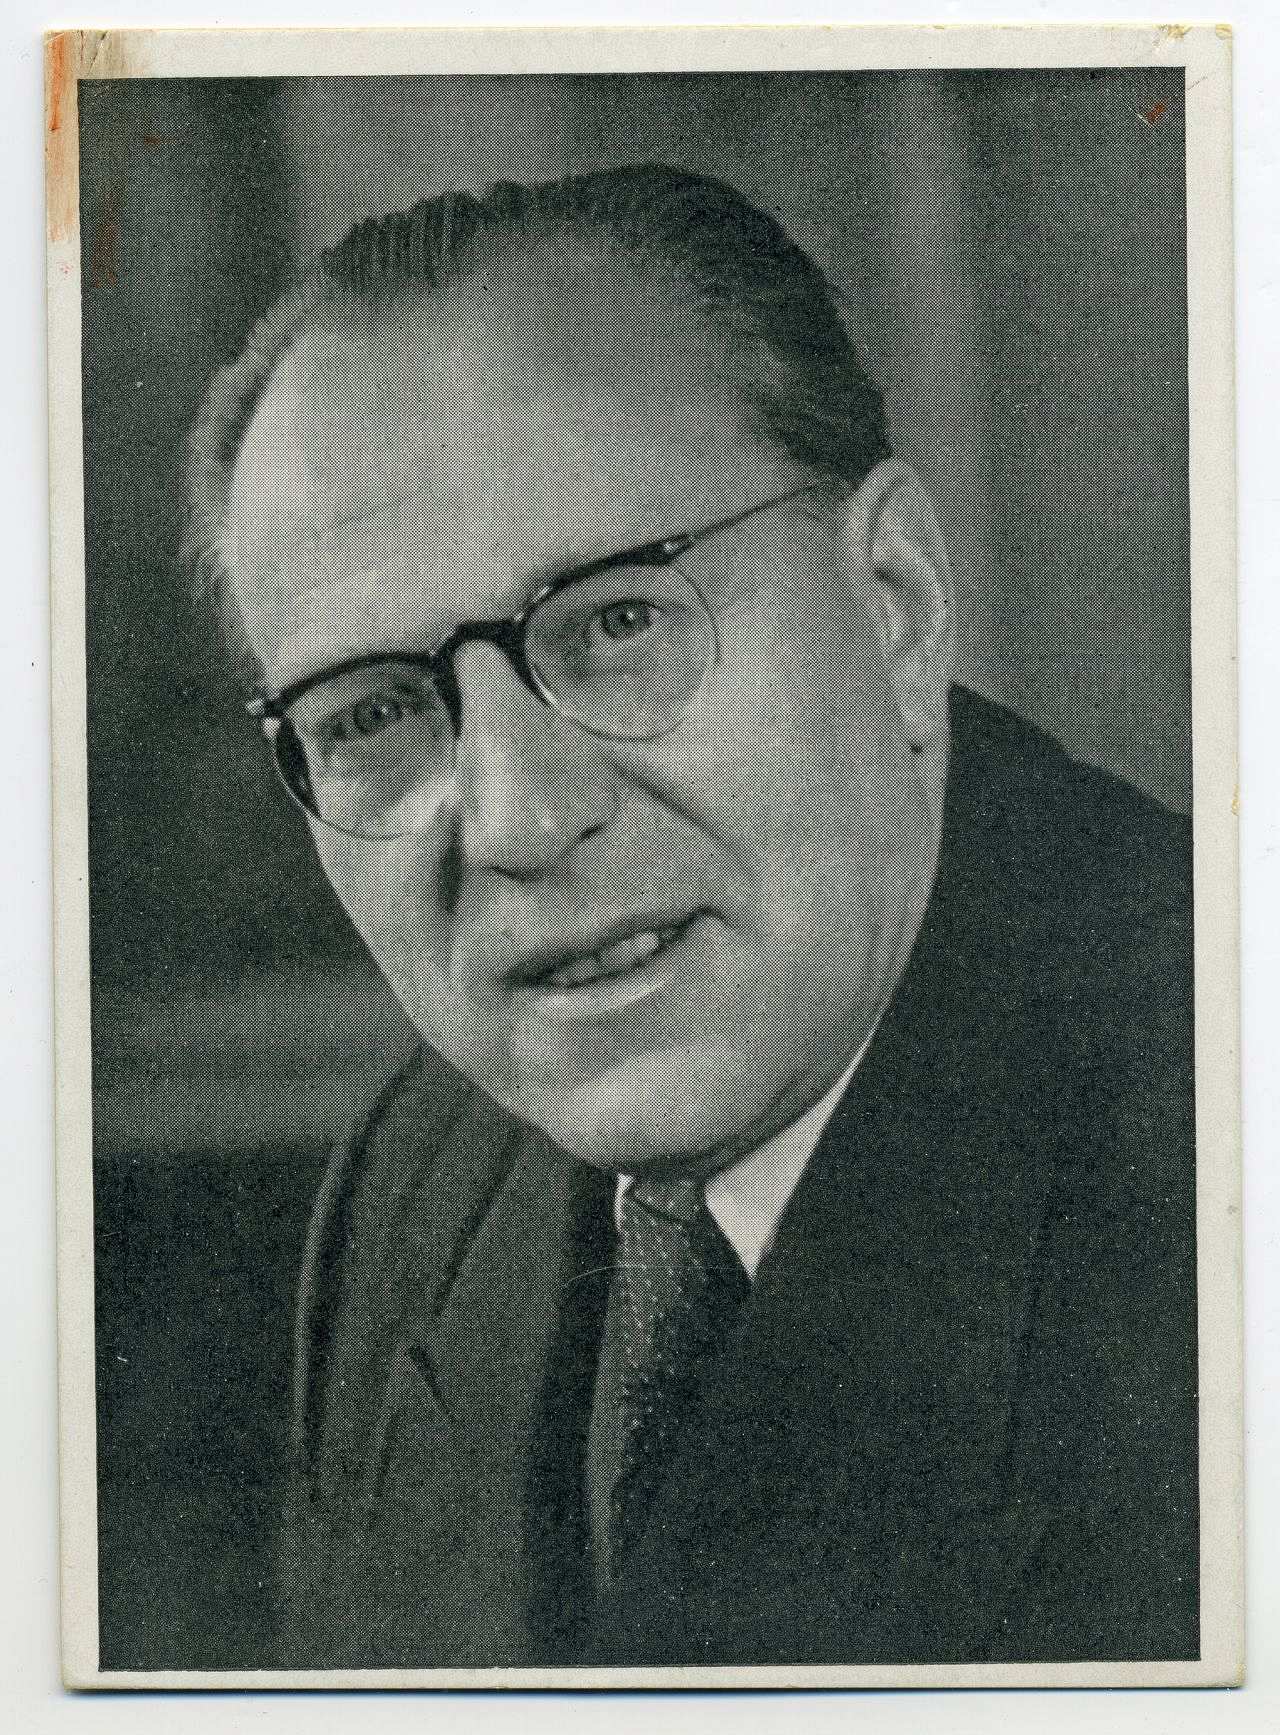 Porträtfoto von DDR-Ministerpräsident Otto Grotewohl, 1950.